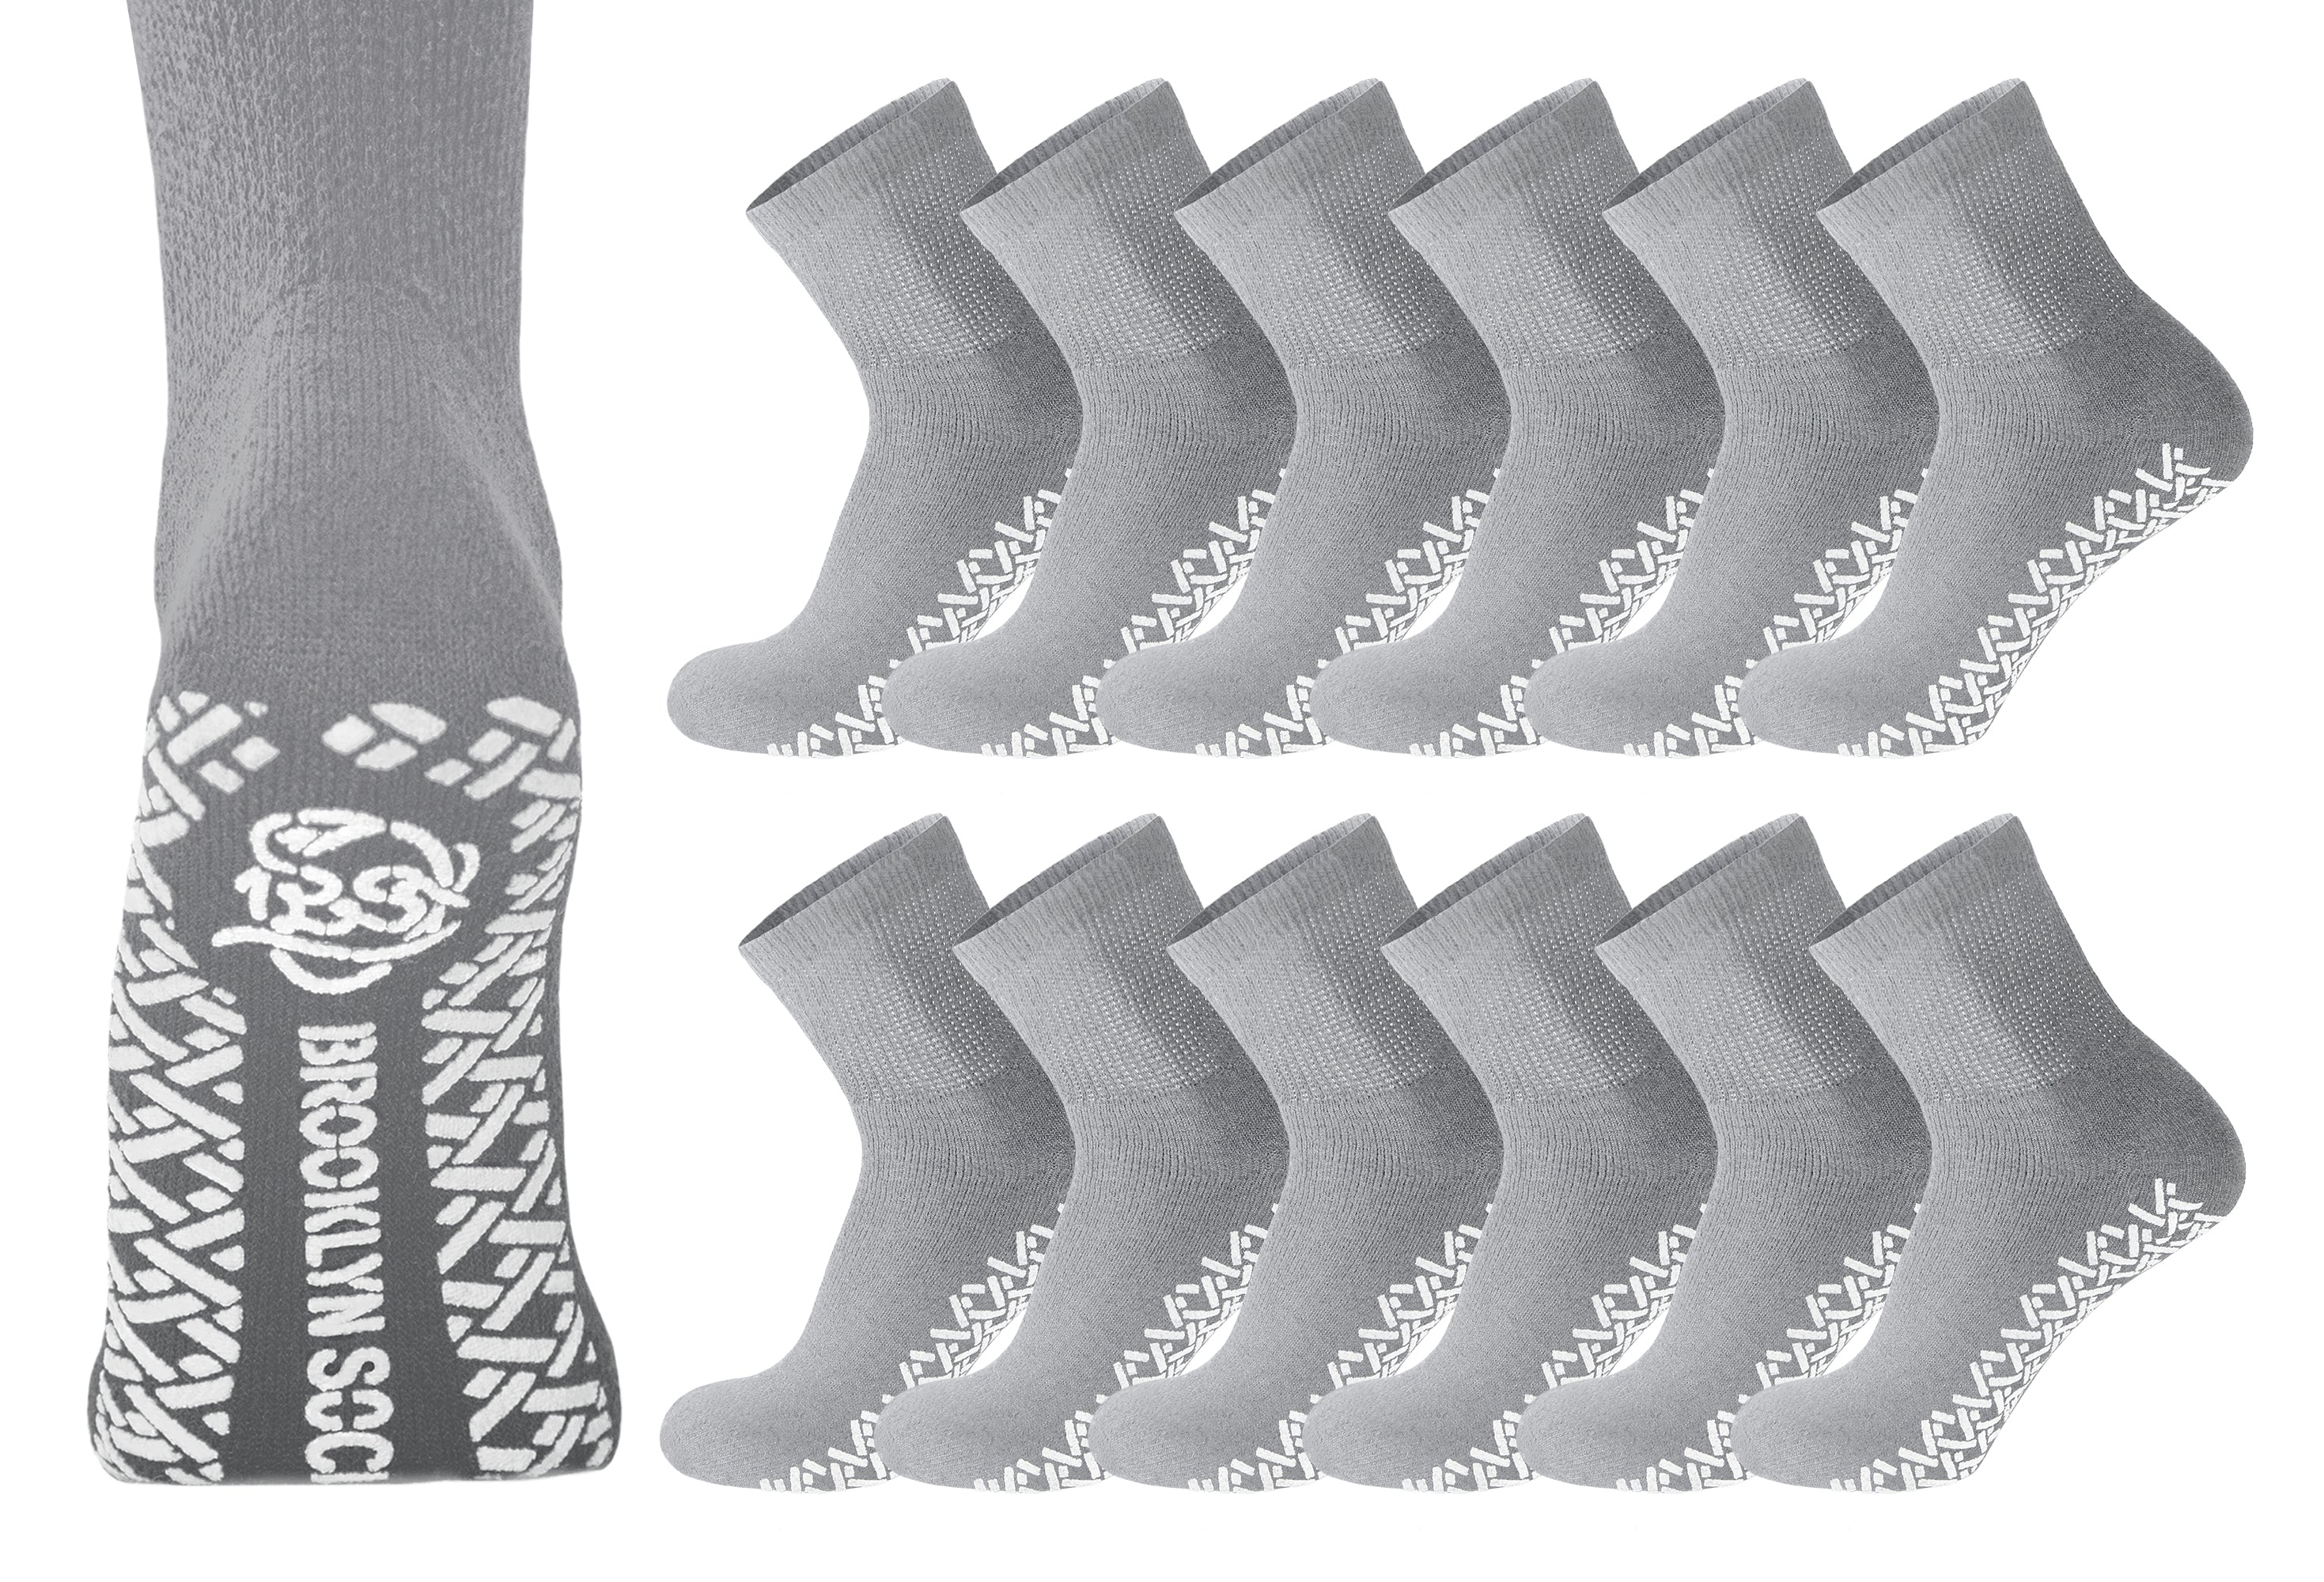 12 Pairs of Non-Skid Diabetic Cotton Quarter Socks with Non